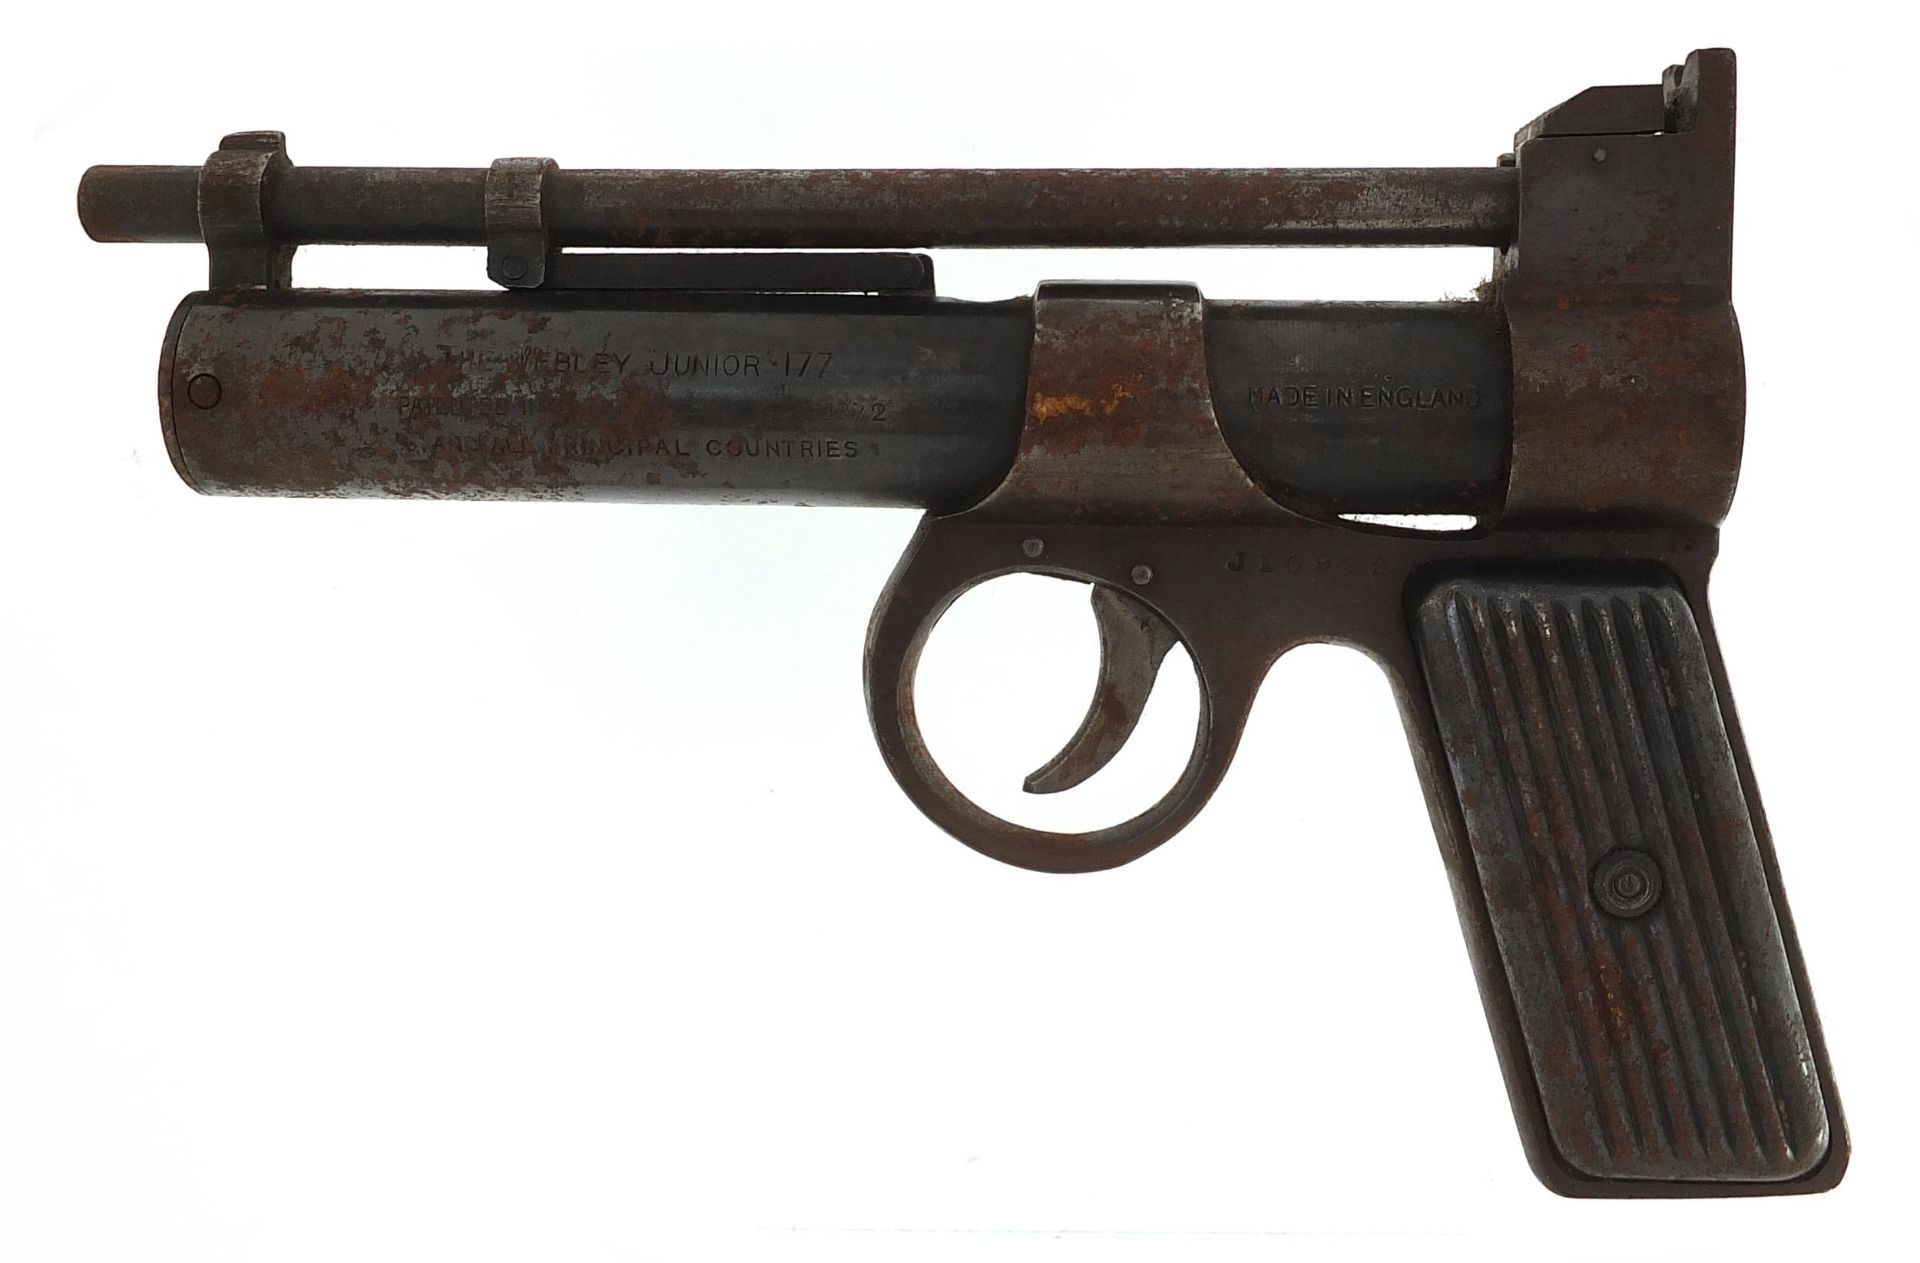 Vintage Webley Junior .177 air pistol by Webley & Scott impressed J10922